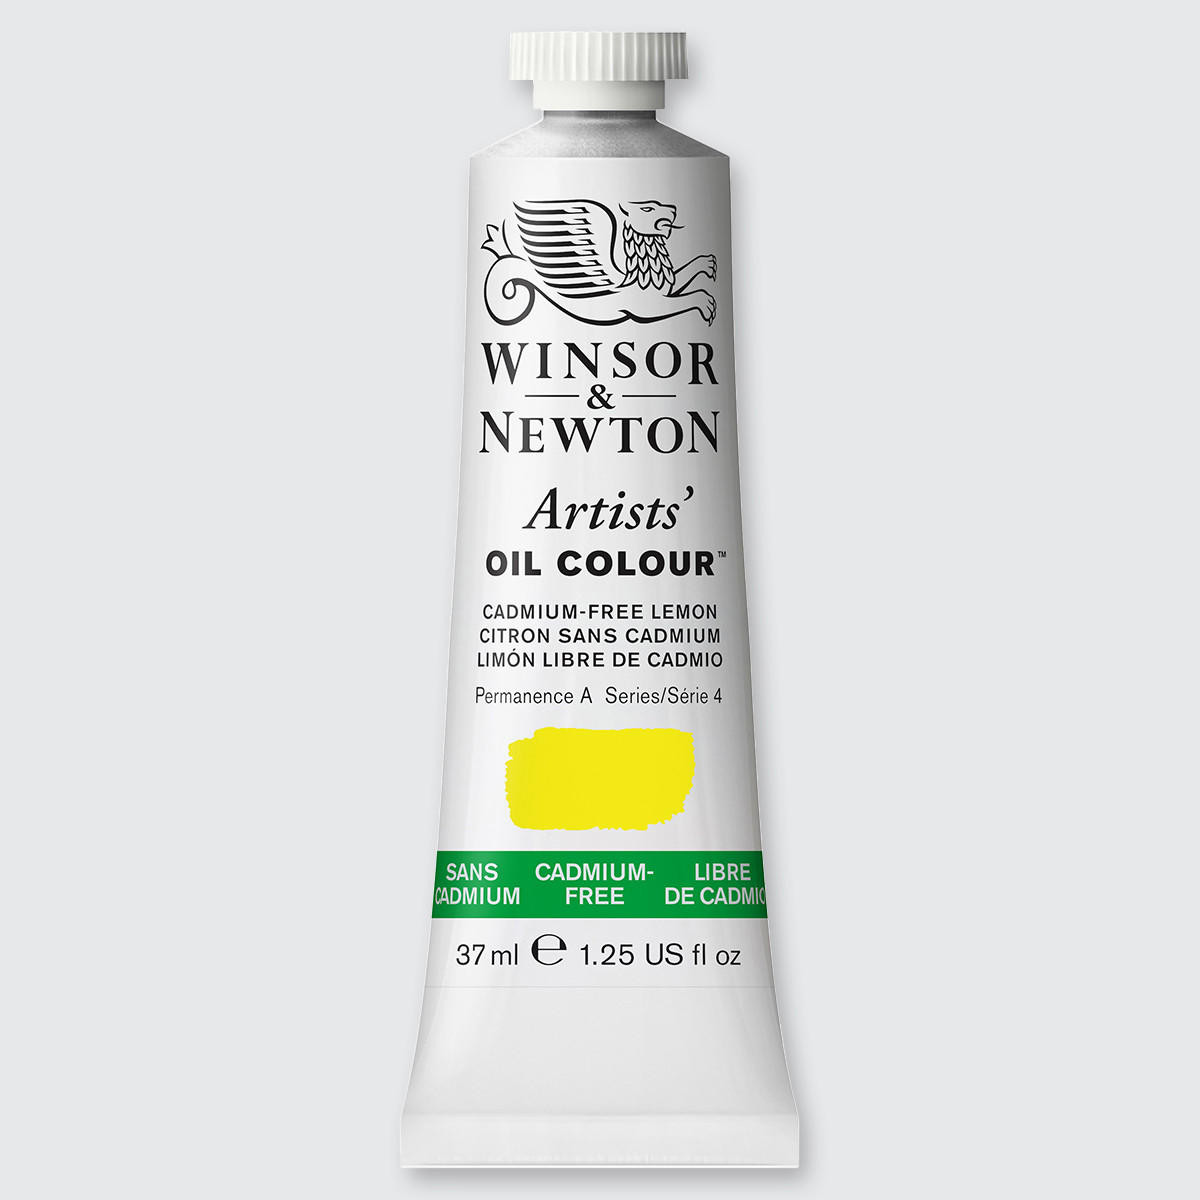 Winsor & Newton Artists’ Oil Colour 37ml Cadmium Free Lemon